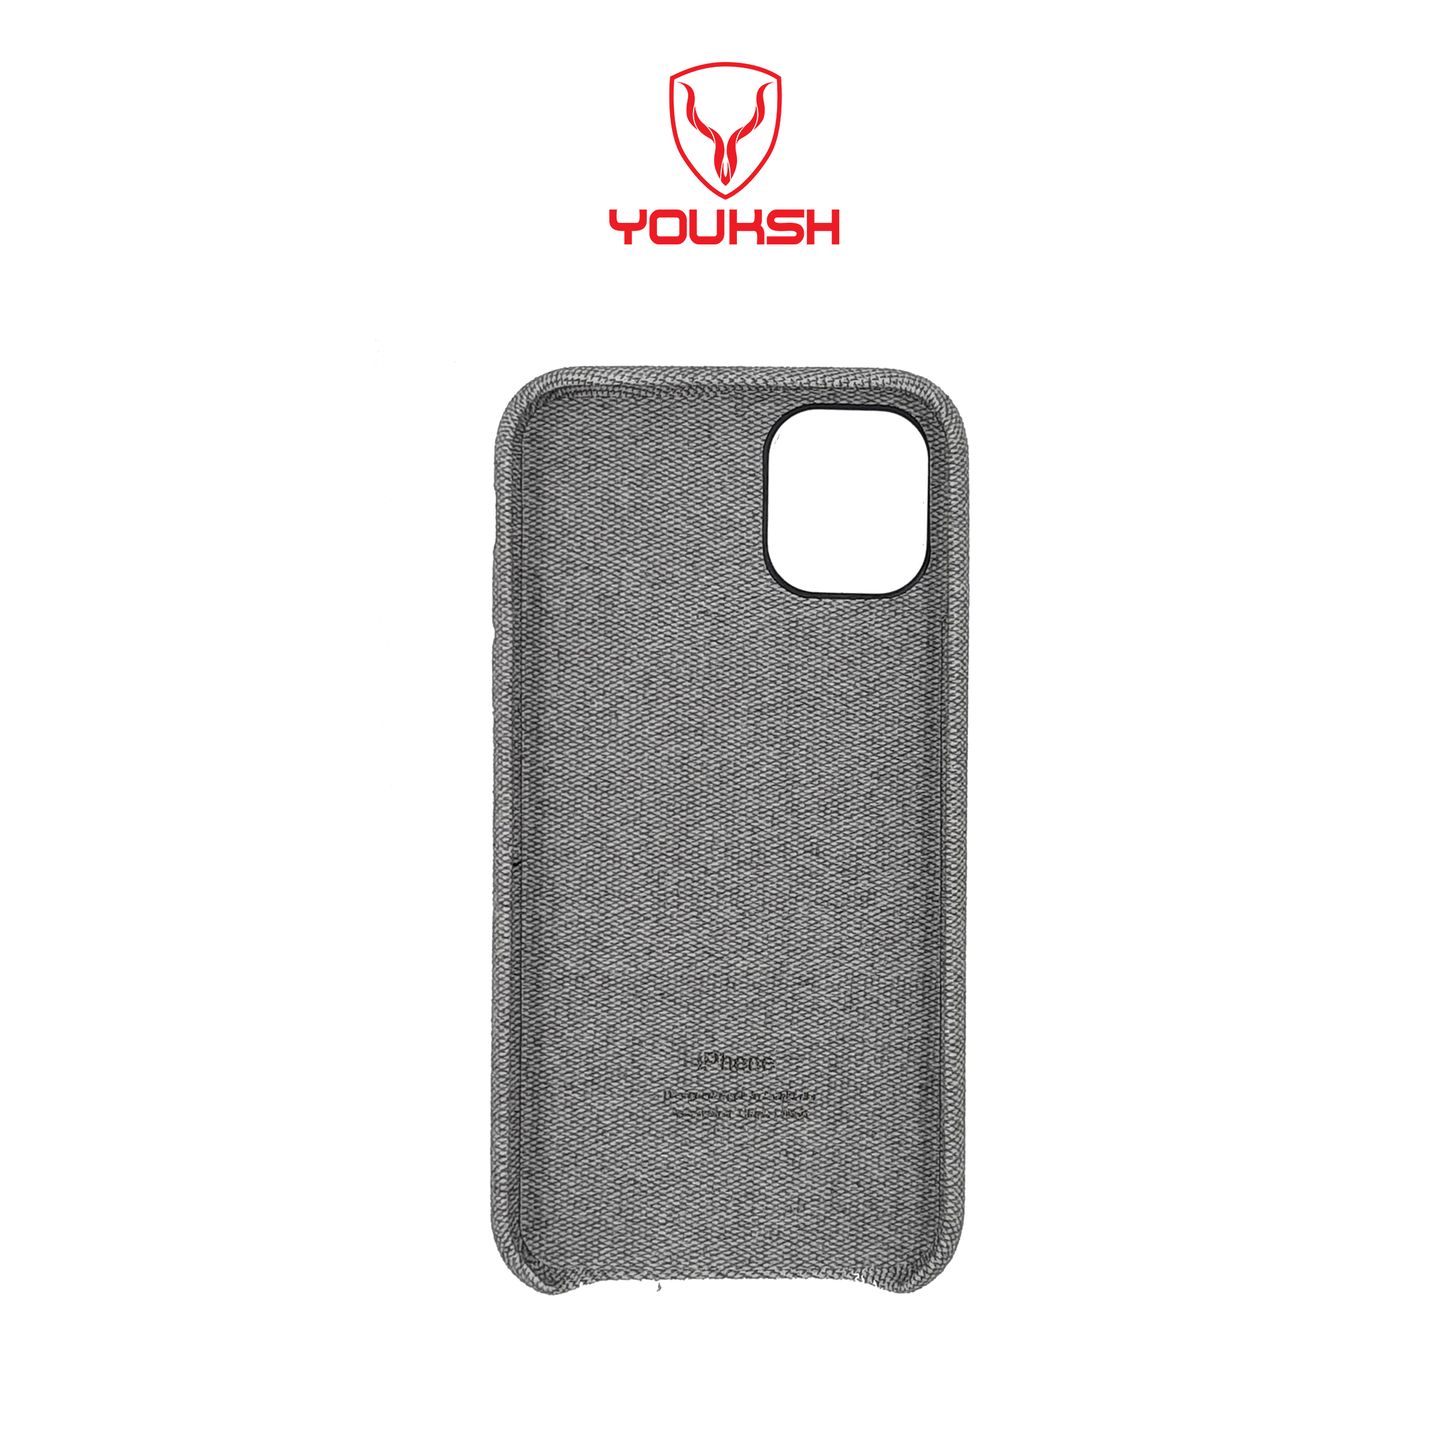 Apple iphone 11 Pro - Youksh Canvas Case - Hot Popular Phone Case.